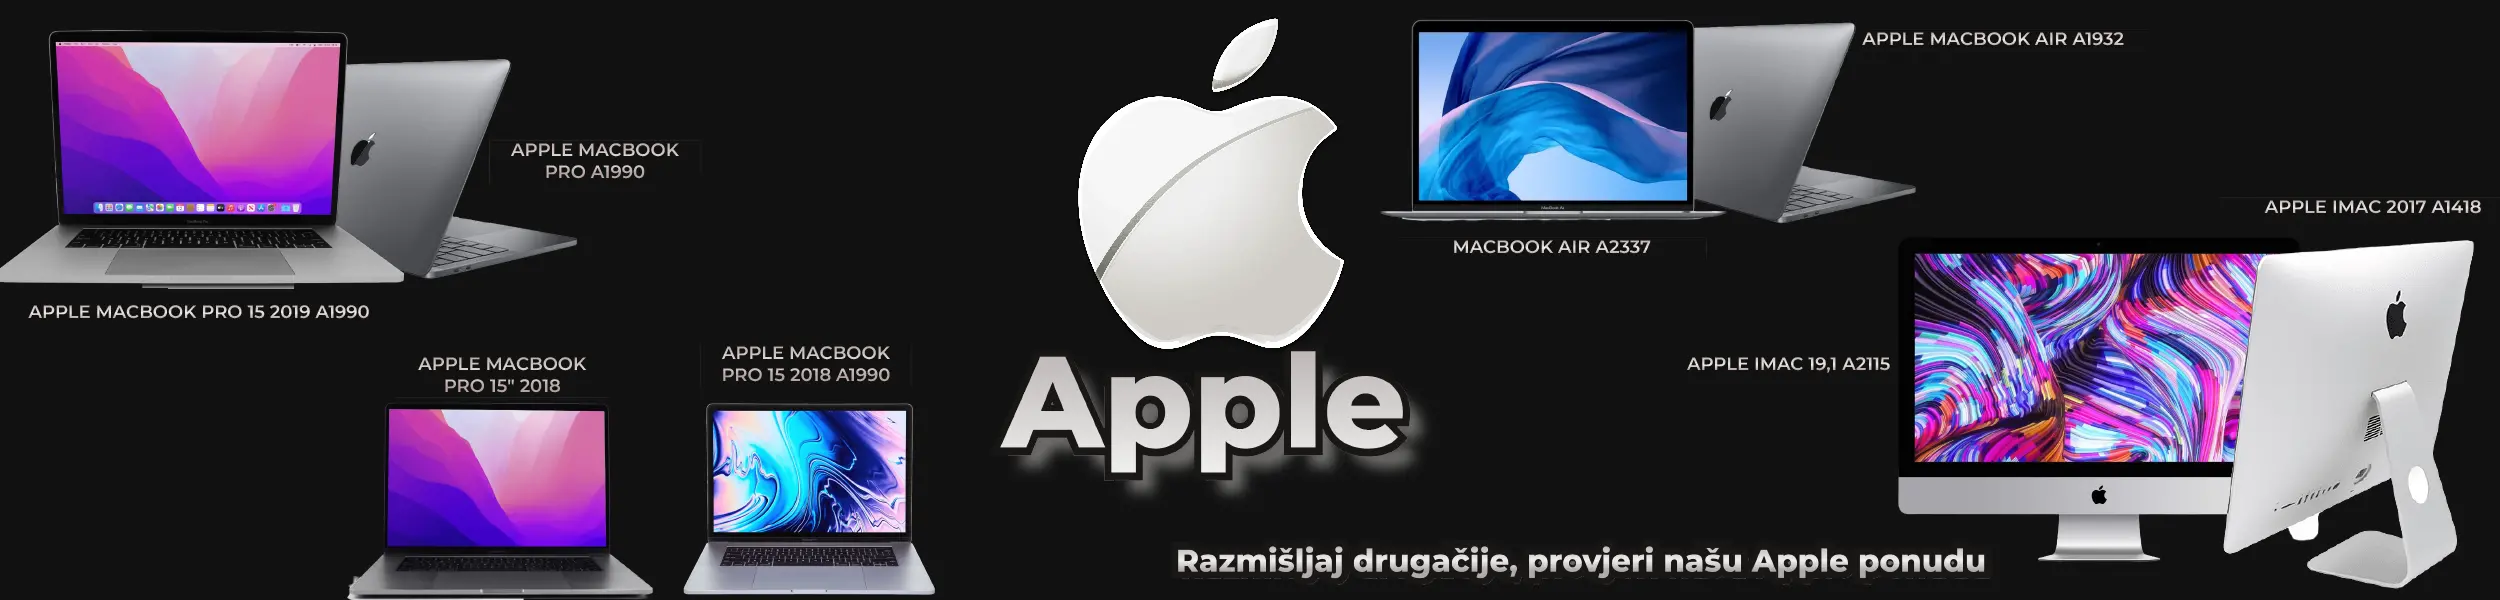 Apple-promo